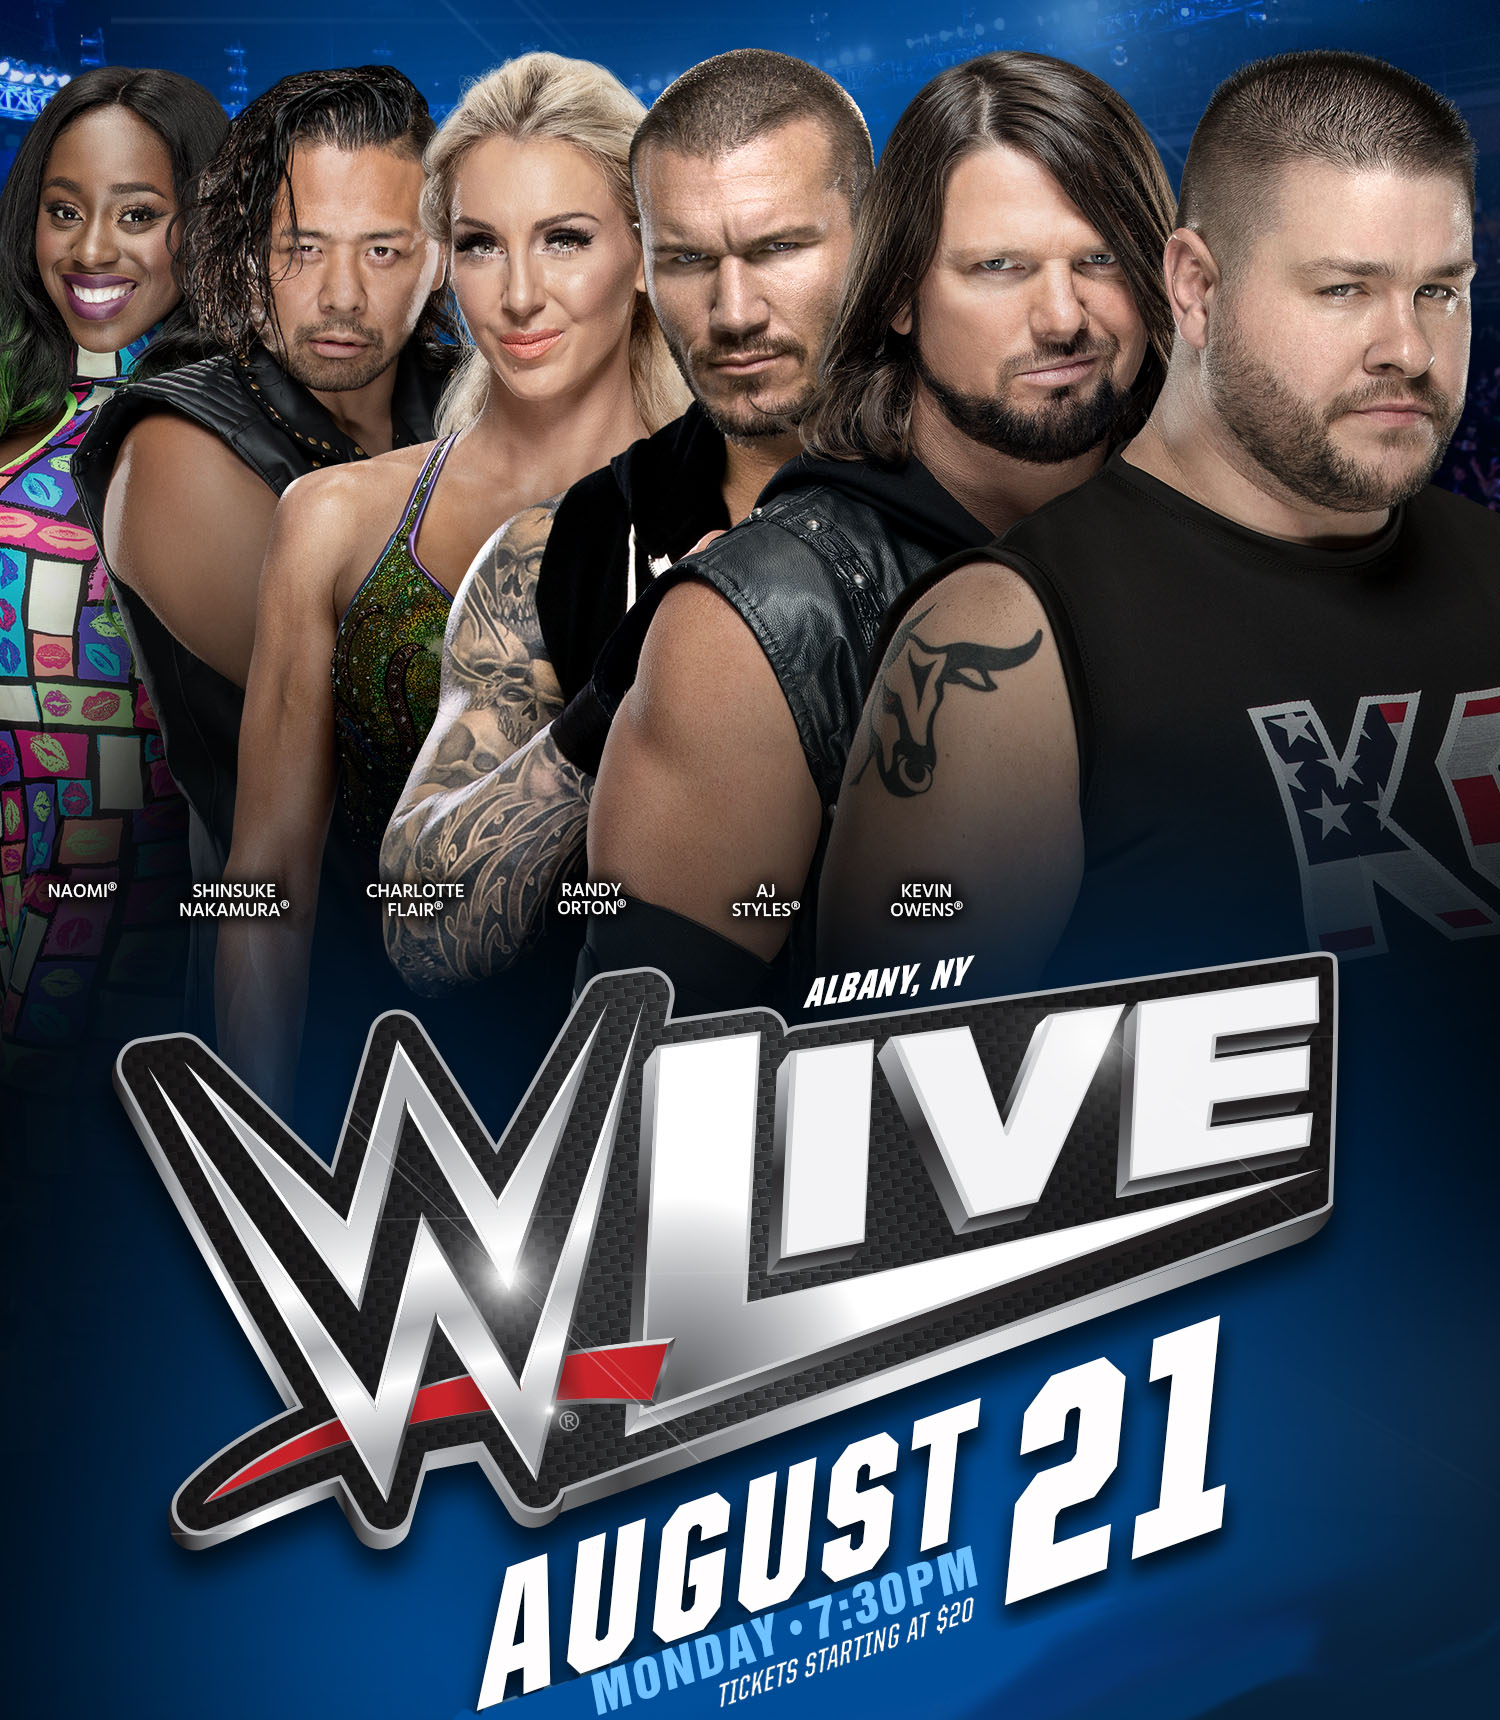 WWE LIVE AT TIMES UNION CENTER Crossgates